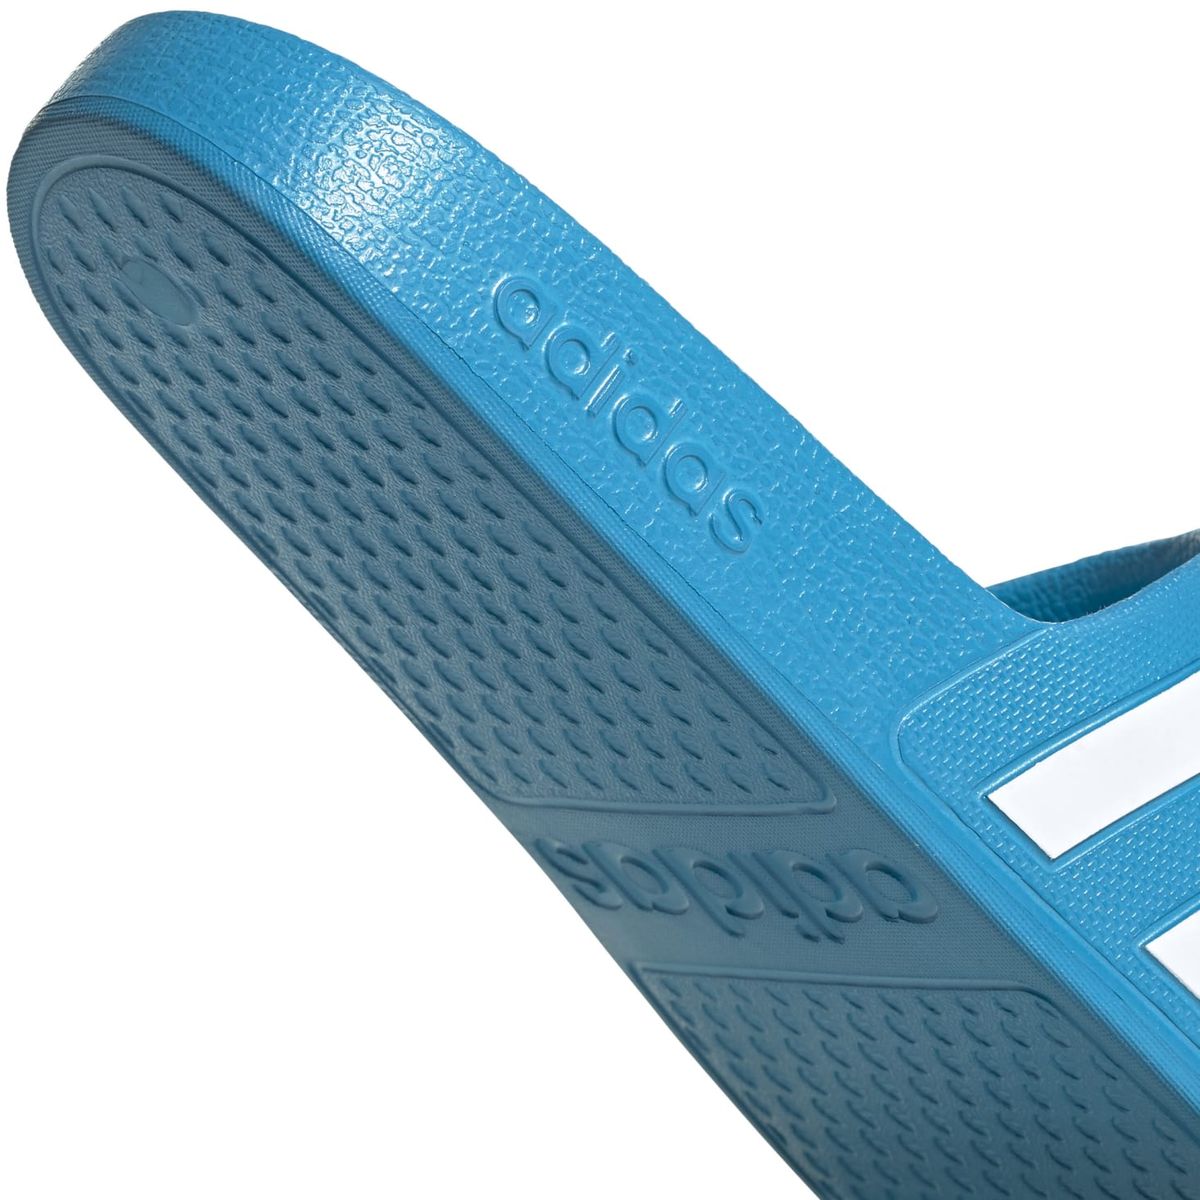 Adidas Aqua adilette Unisex_6